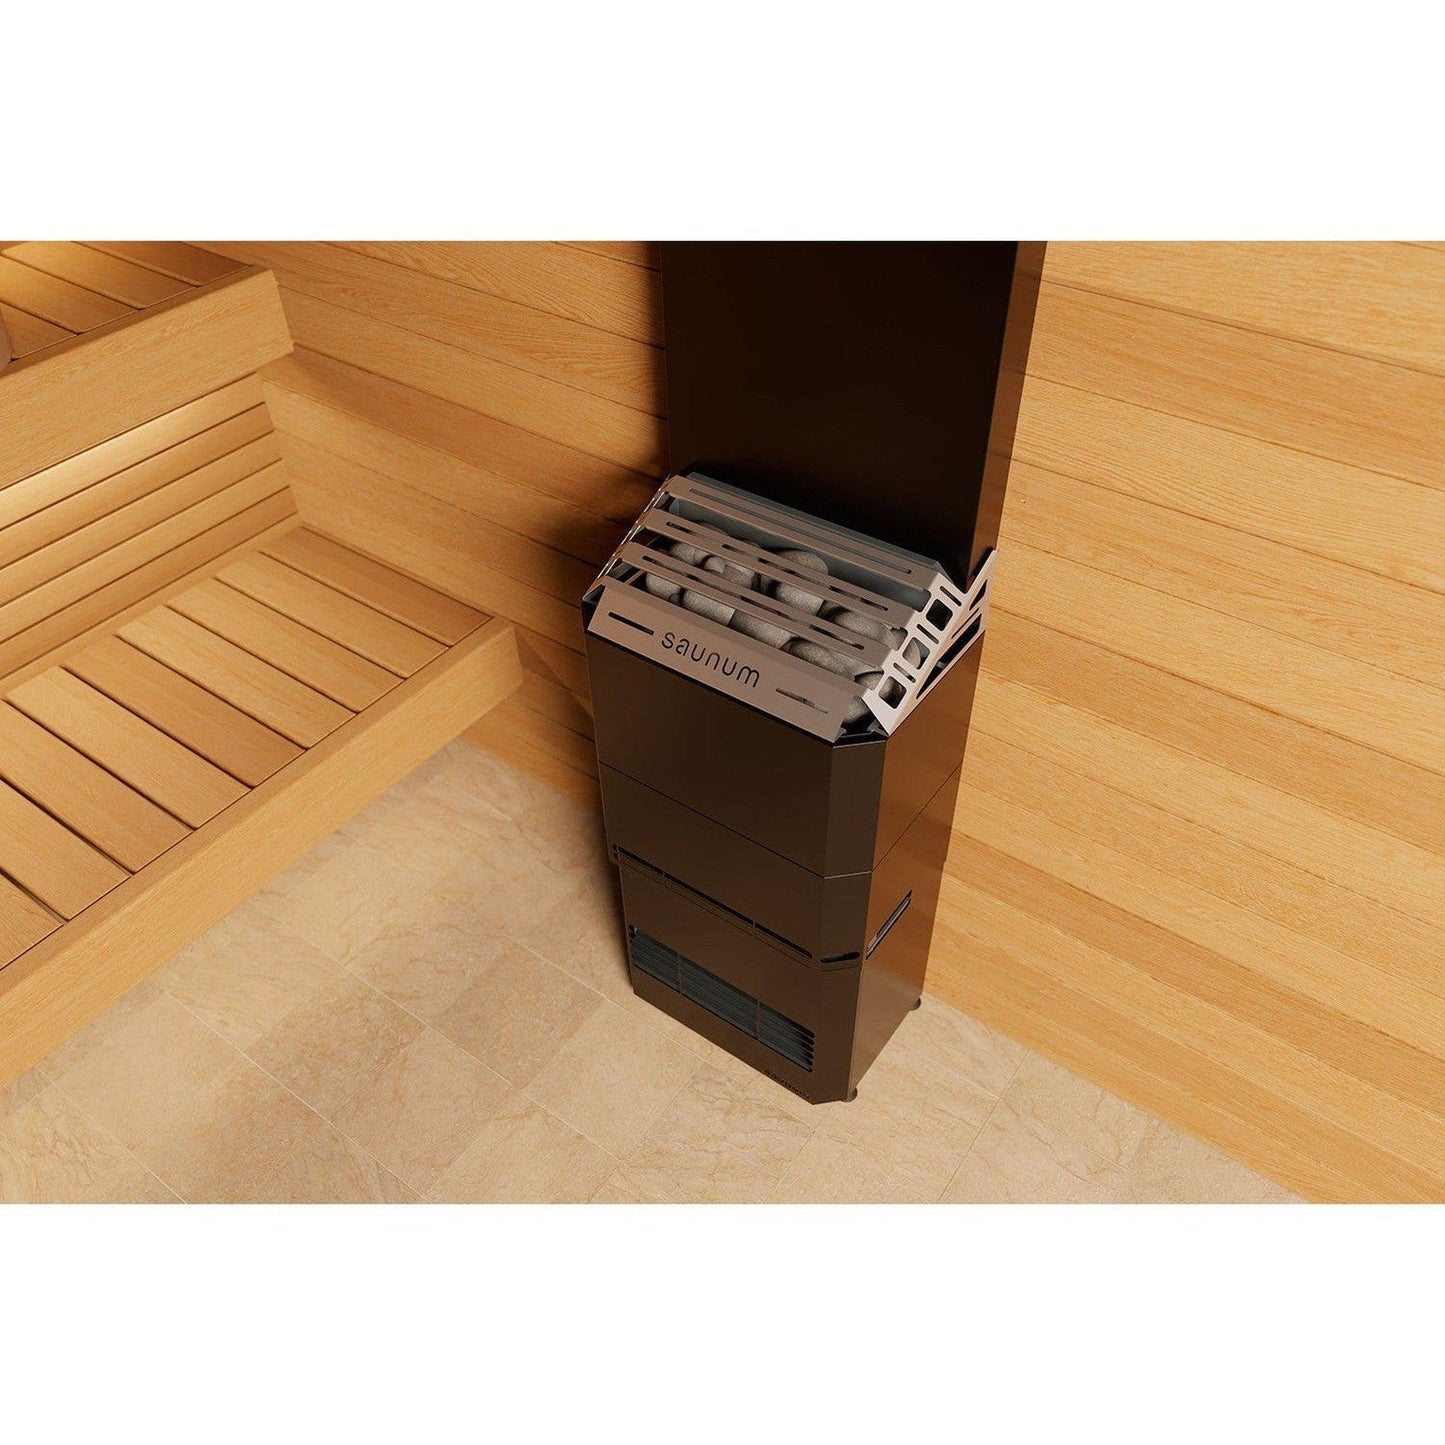 Saunum Air 7 Nordic Black 6.4kW Sauna Heater with Climate Equalizer